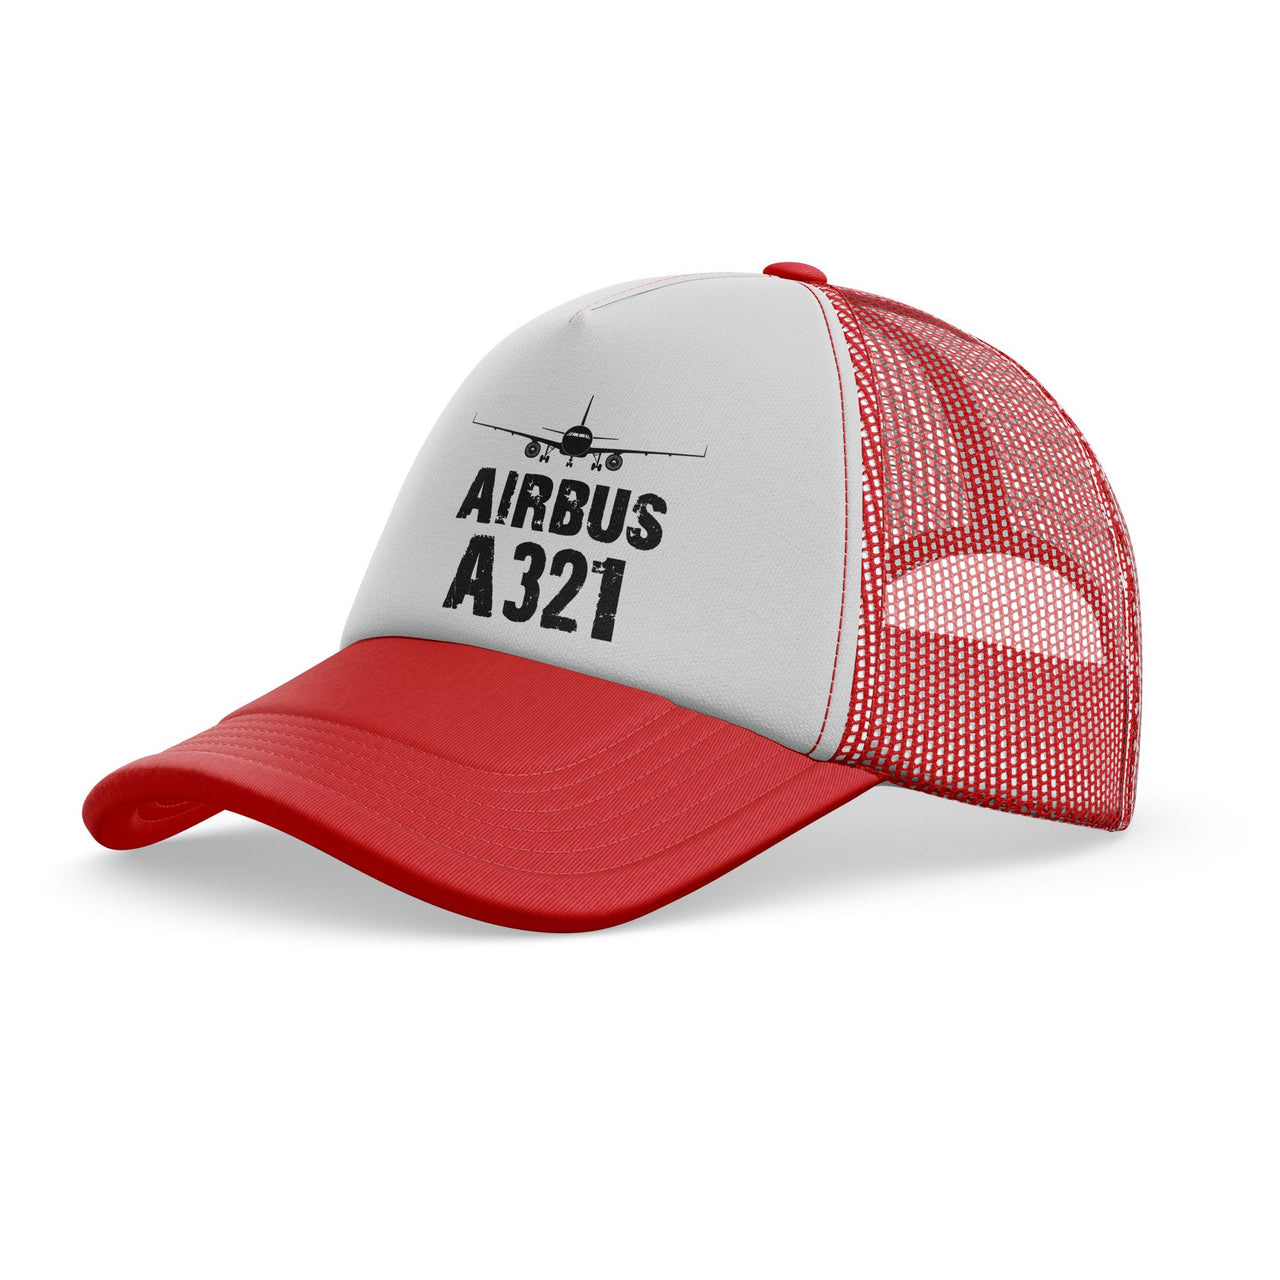 Airbus A321 & Plane Designed Trucker Caps & Hats